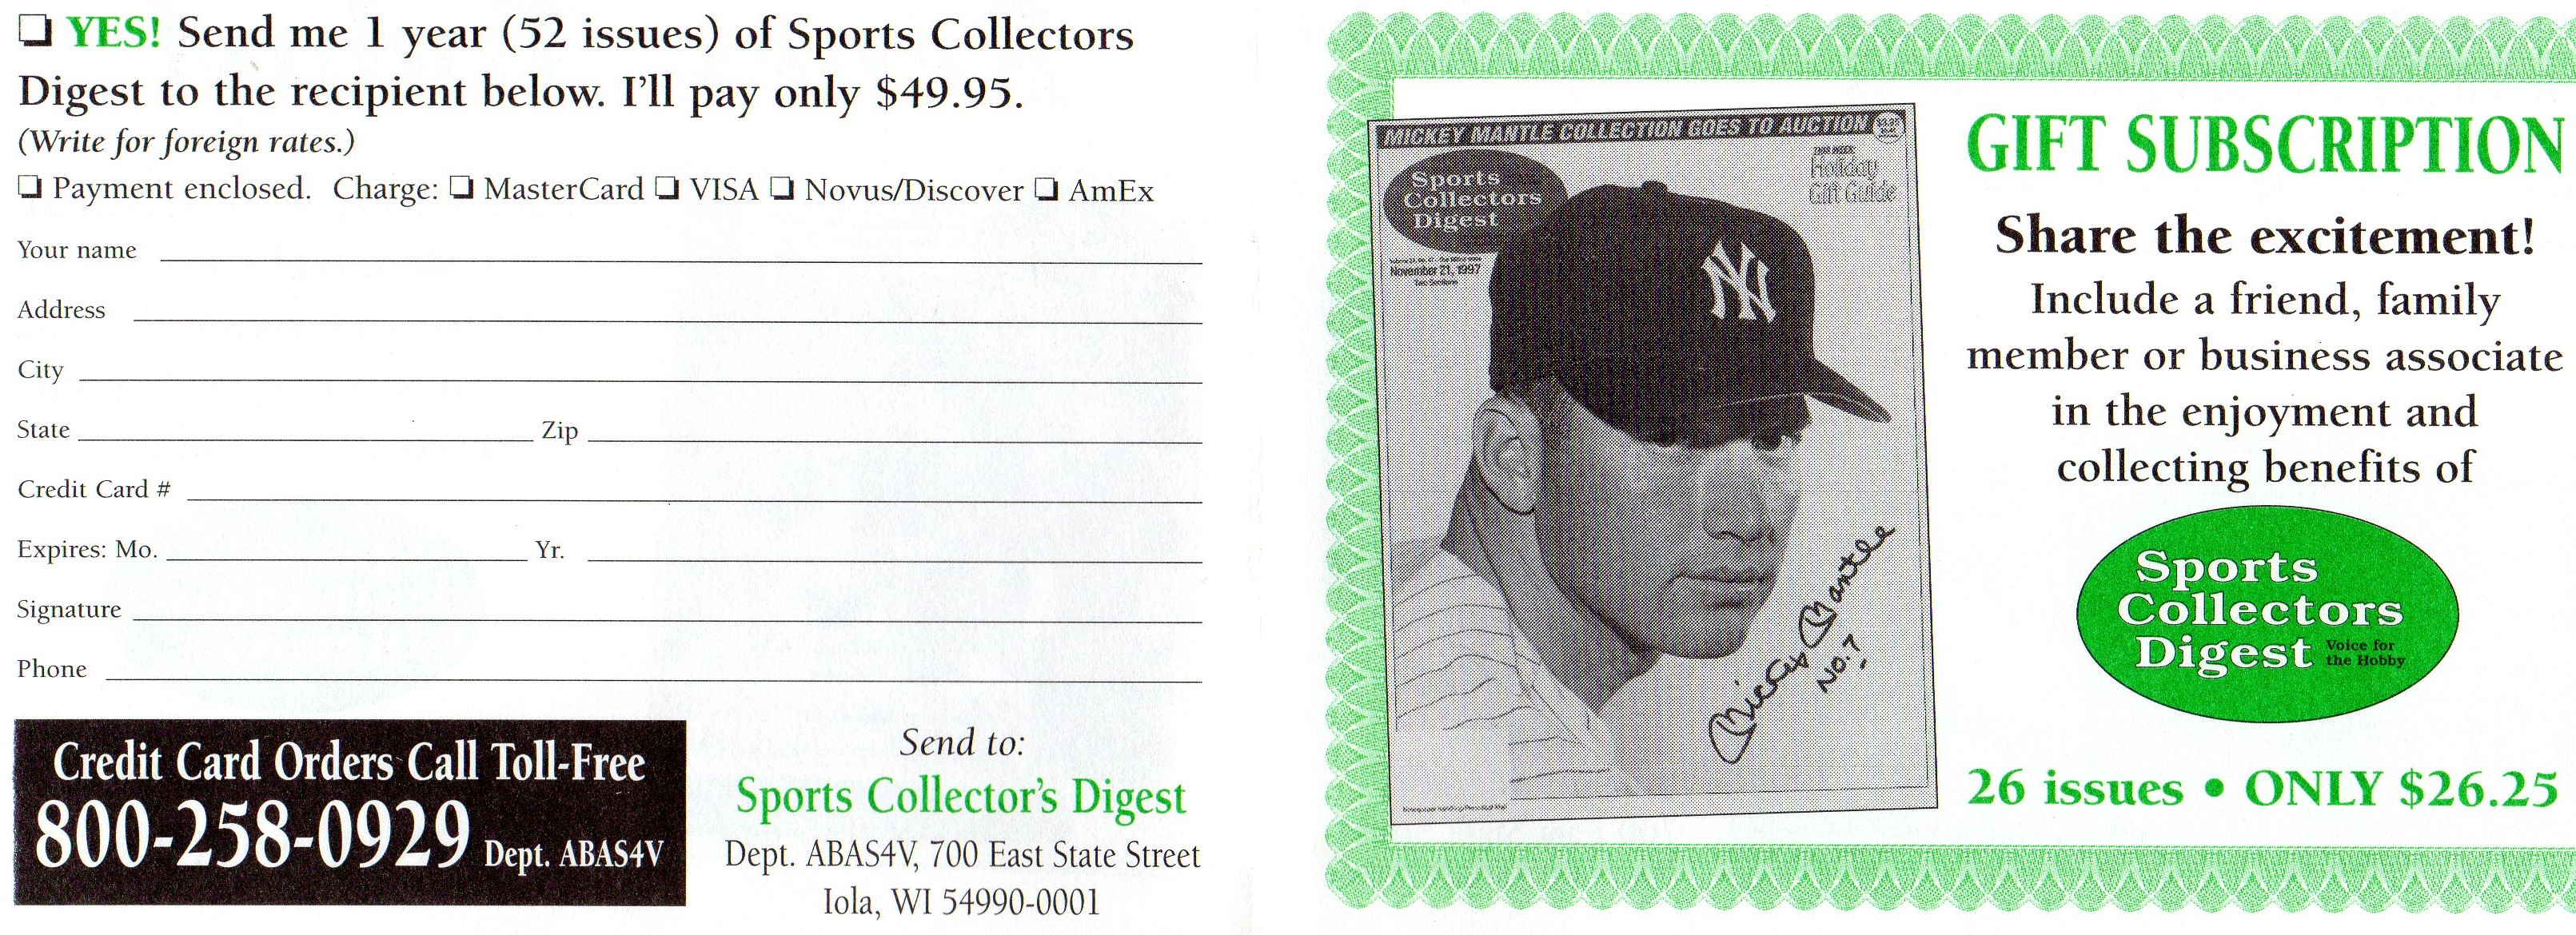 1997 sports collectors digest